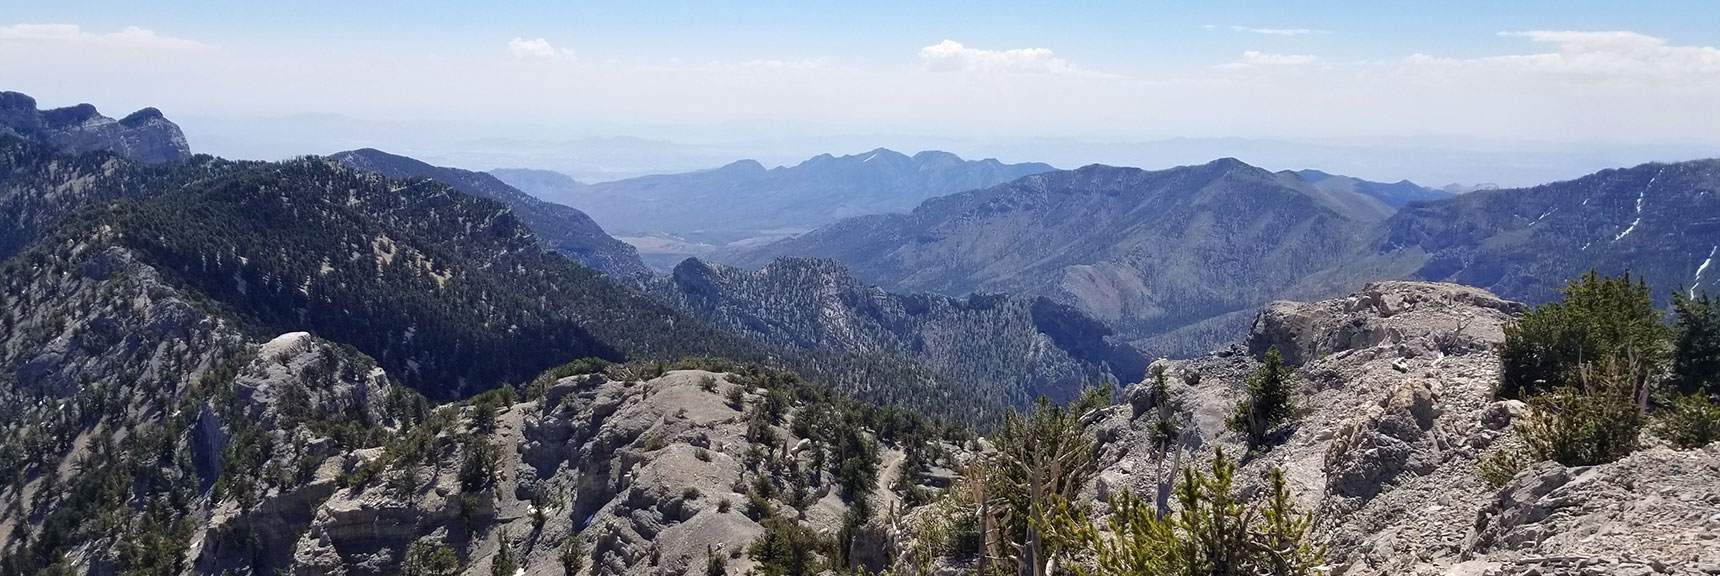 Kyle Canyon Viewed from Lee Peak Summit